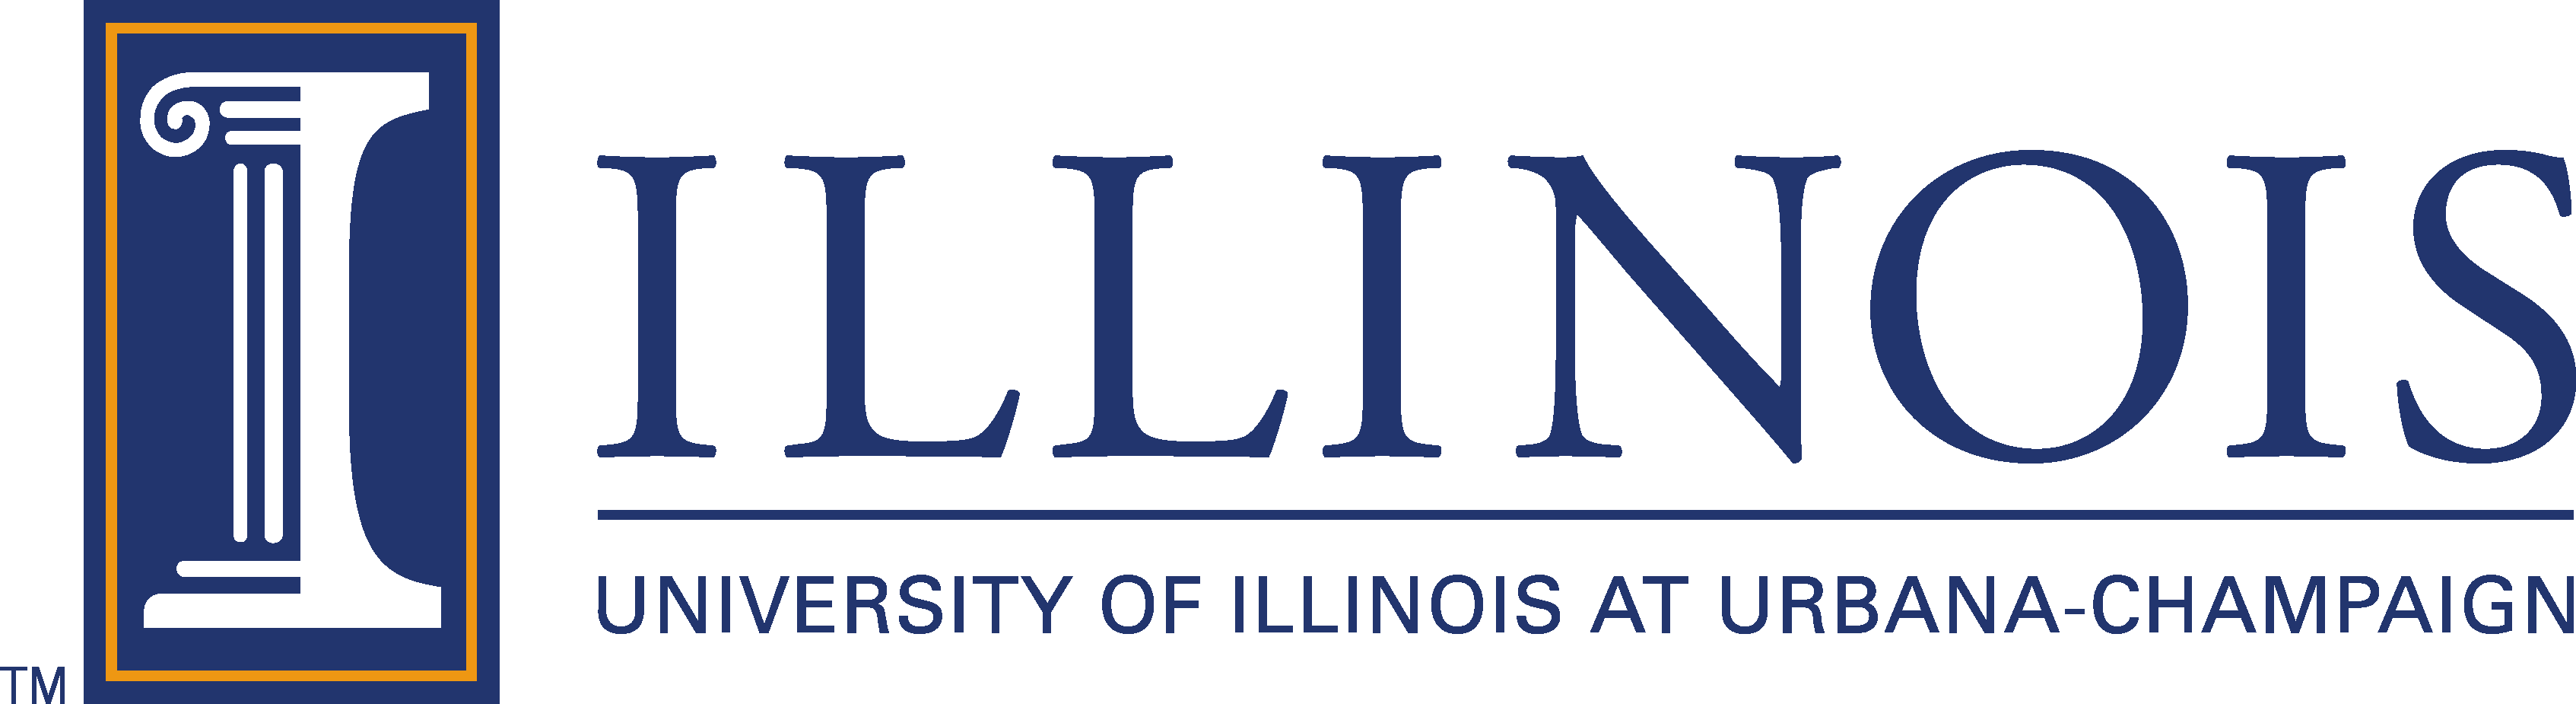 University of Illinois Logo - Vaishnavi Subramanian